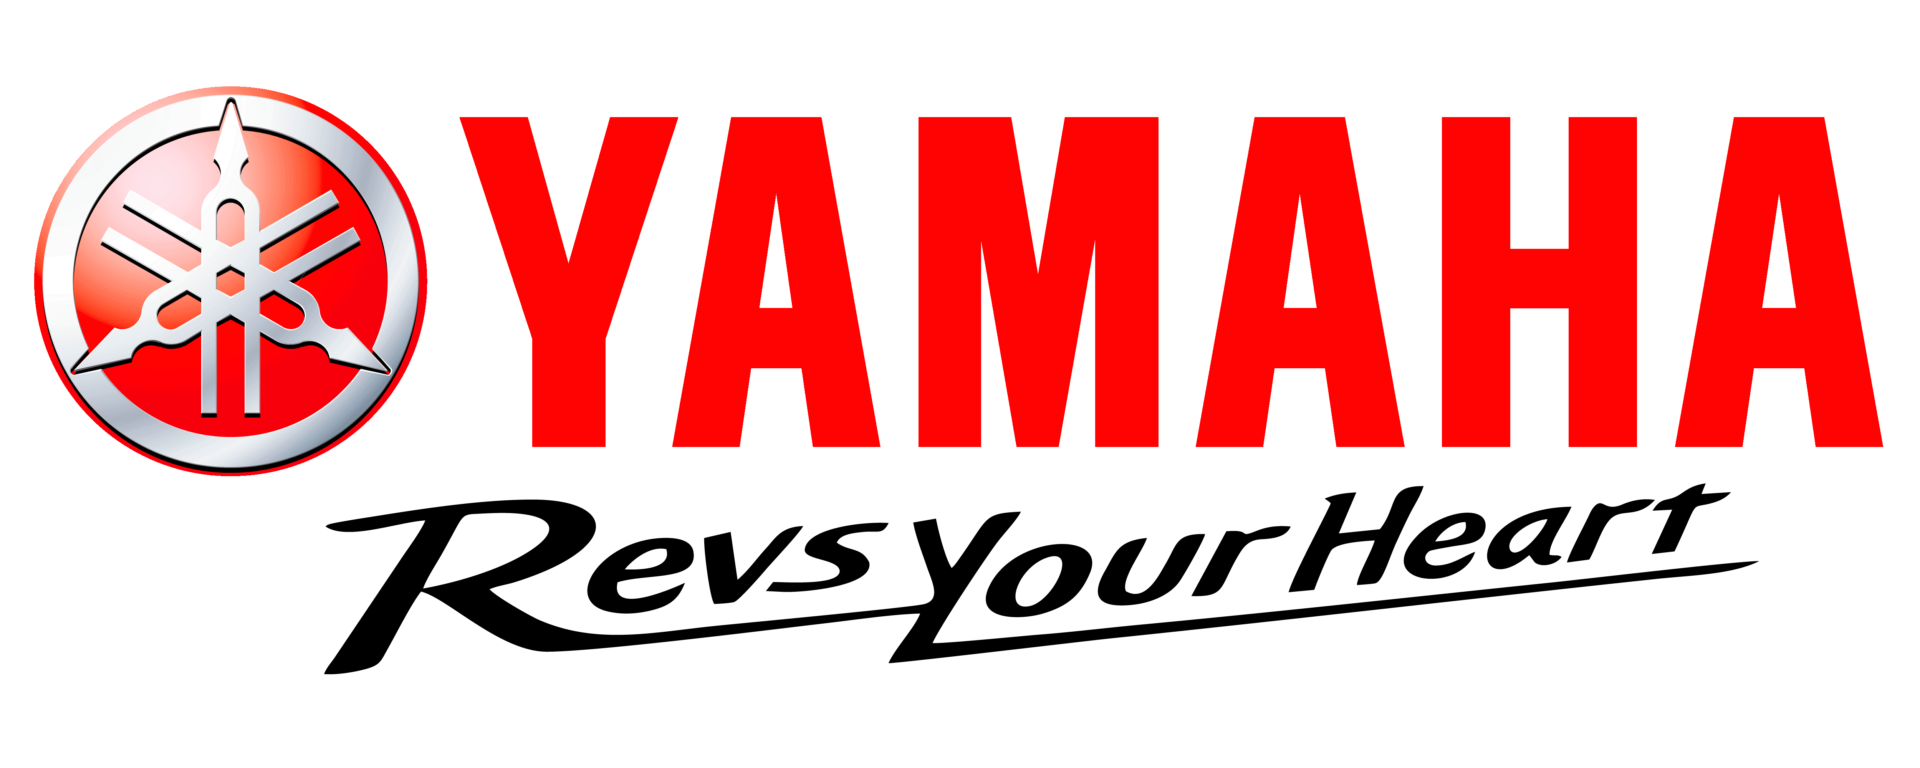 Yamaha Logo Png Images HD